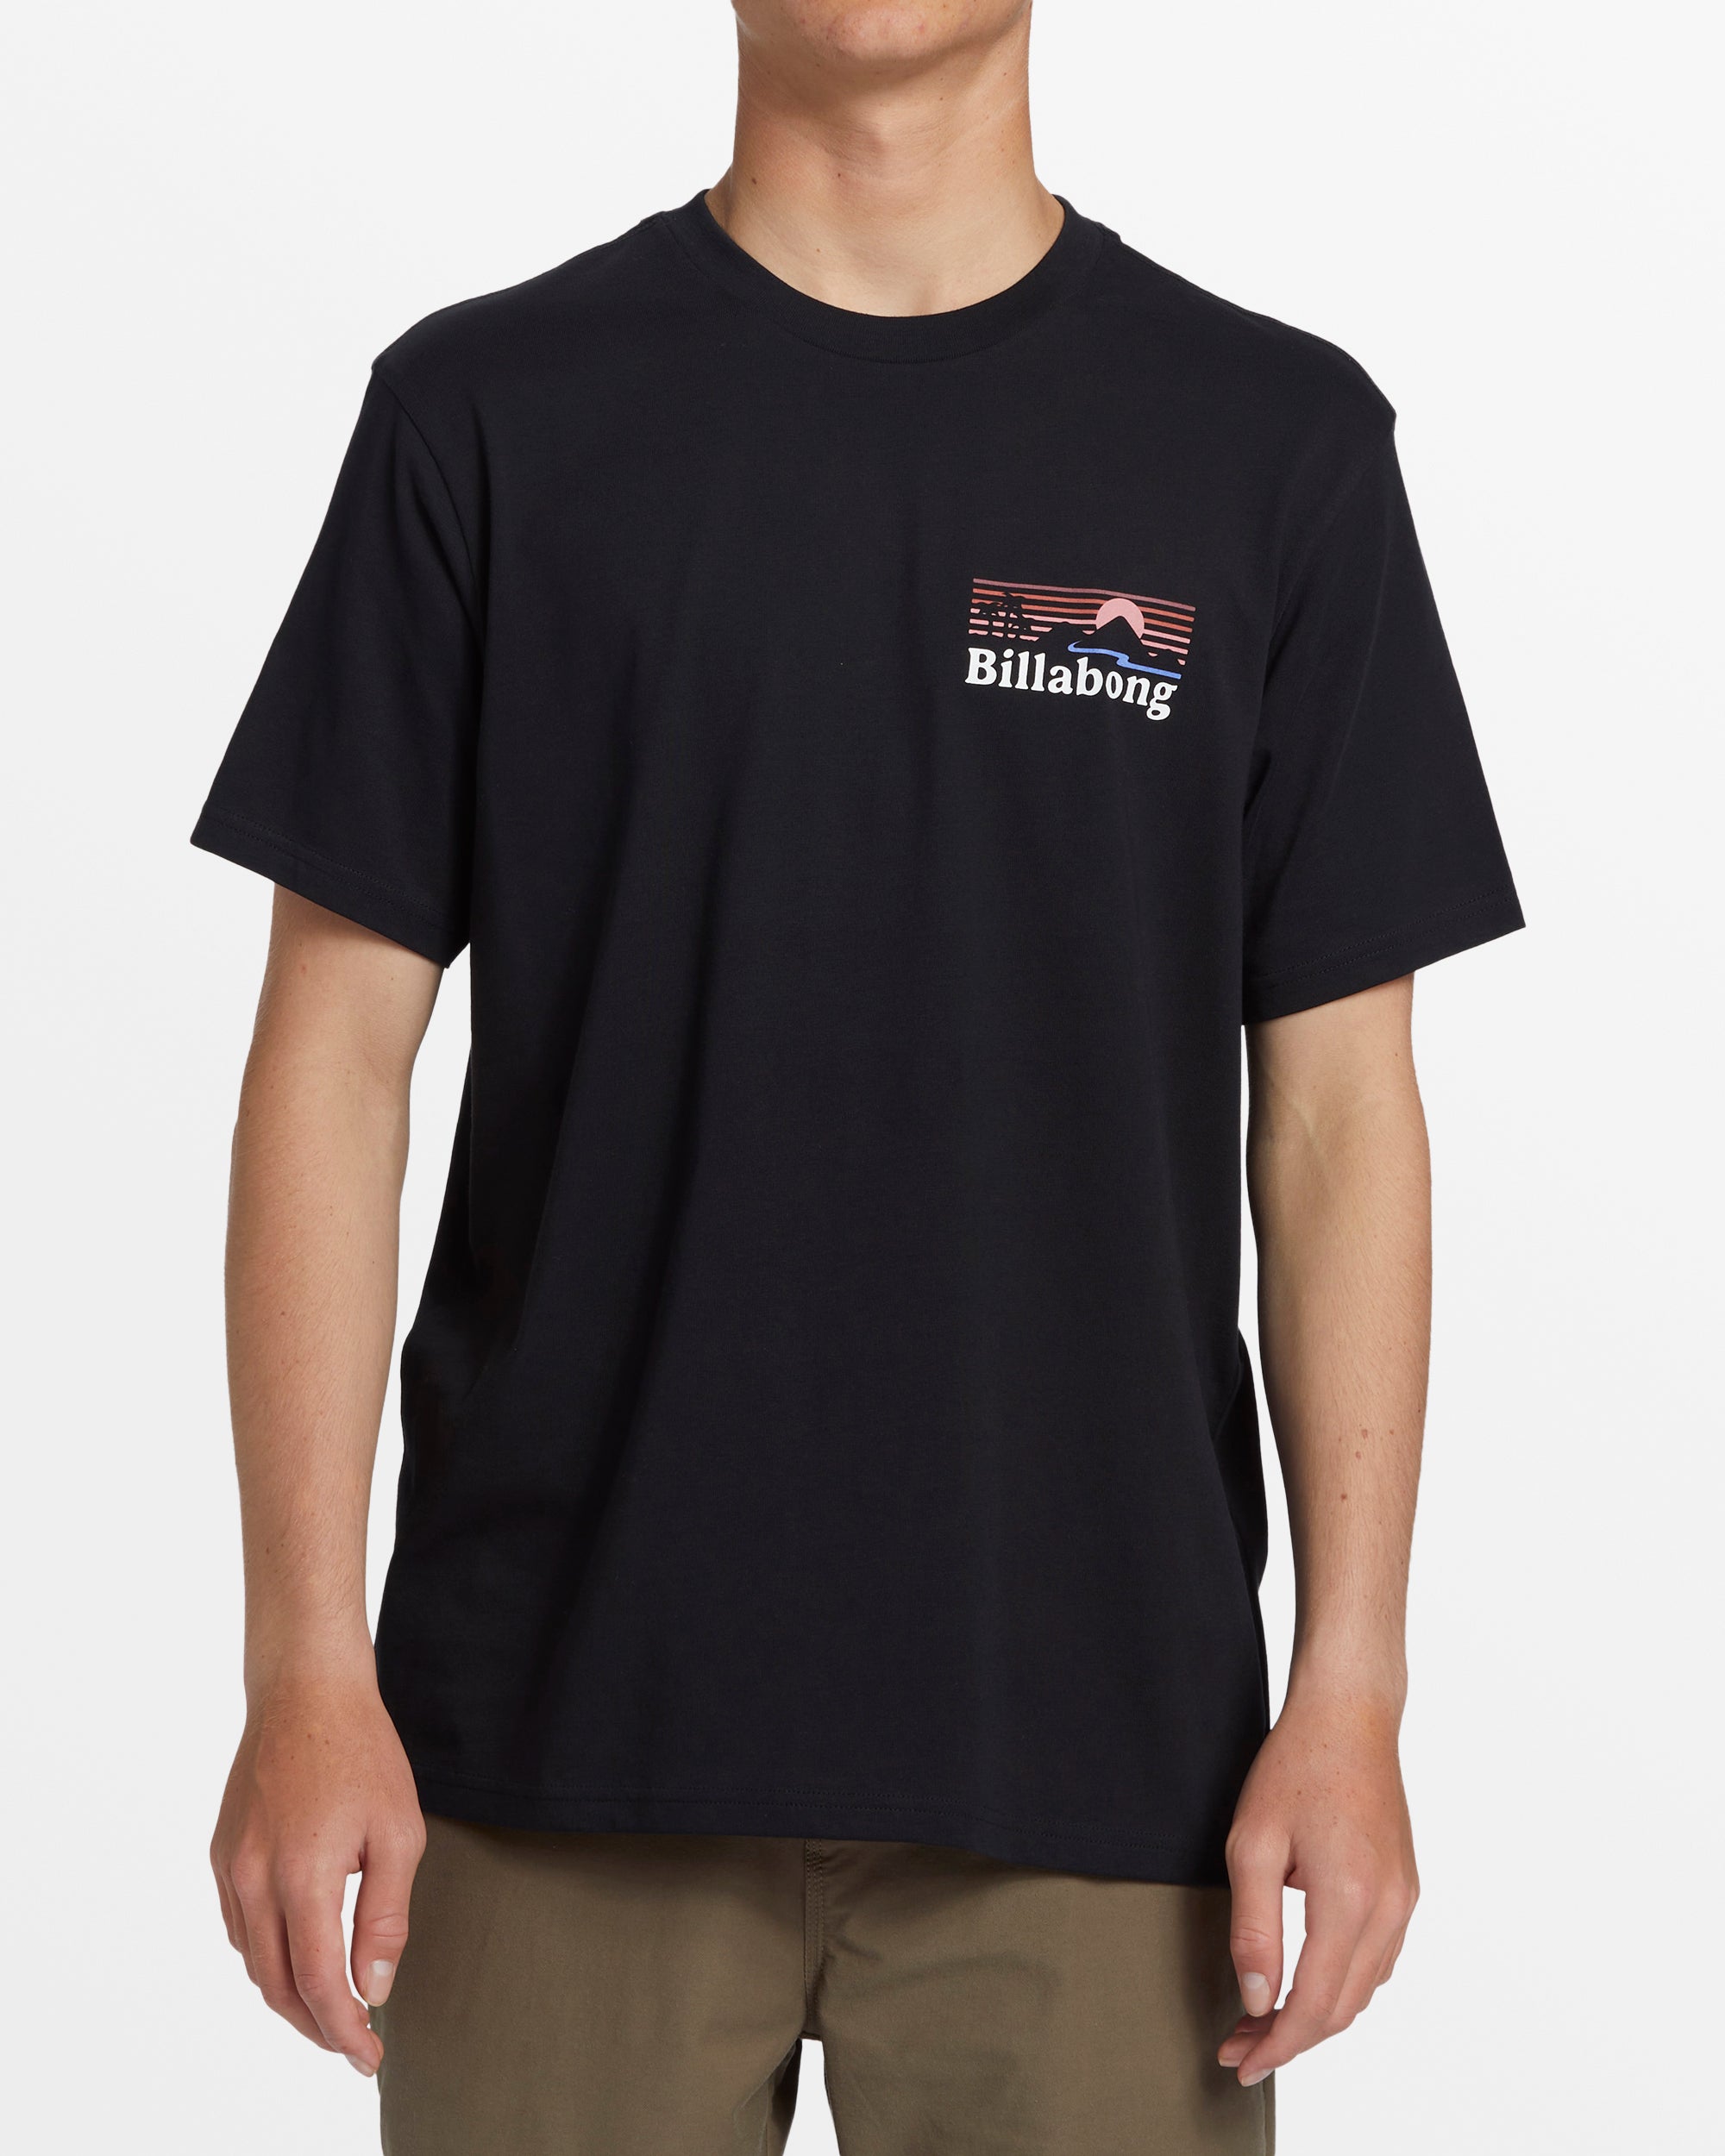 A/Div Range T-Shirt - Black